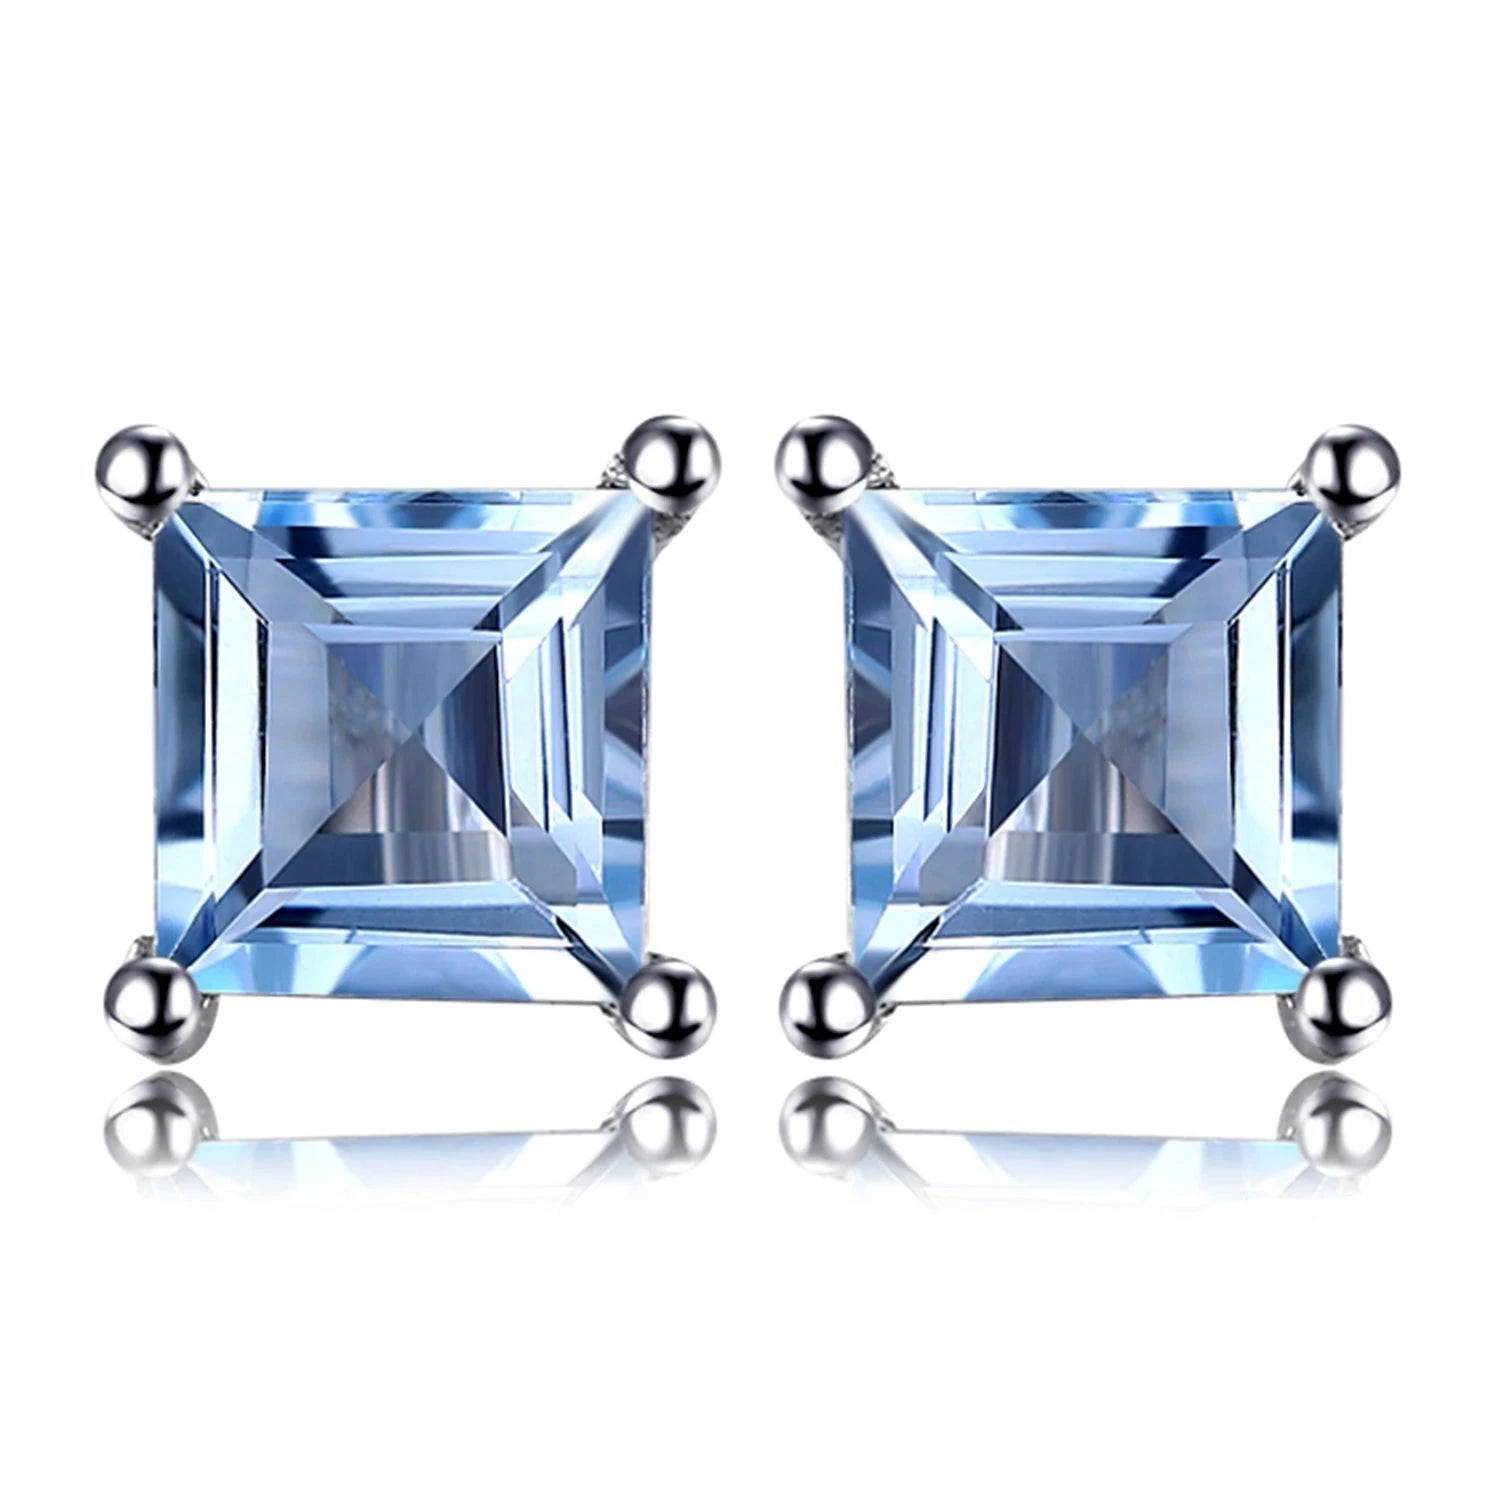 Square Genuine Blue Topaz Amethyst Citrine Garnet Created Sapphire Ruby Emerald 925 Sterling Silver Stud Earrings